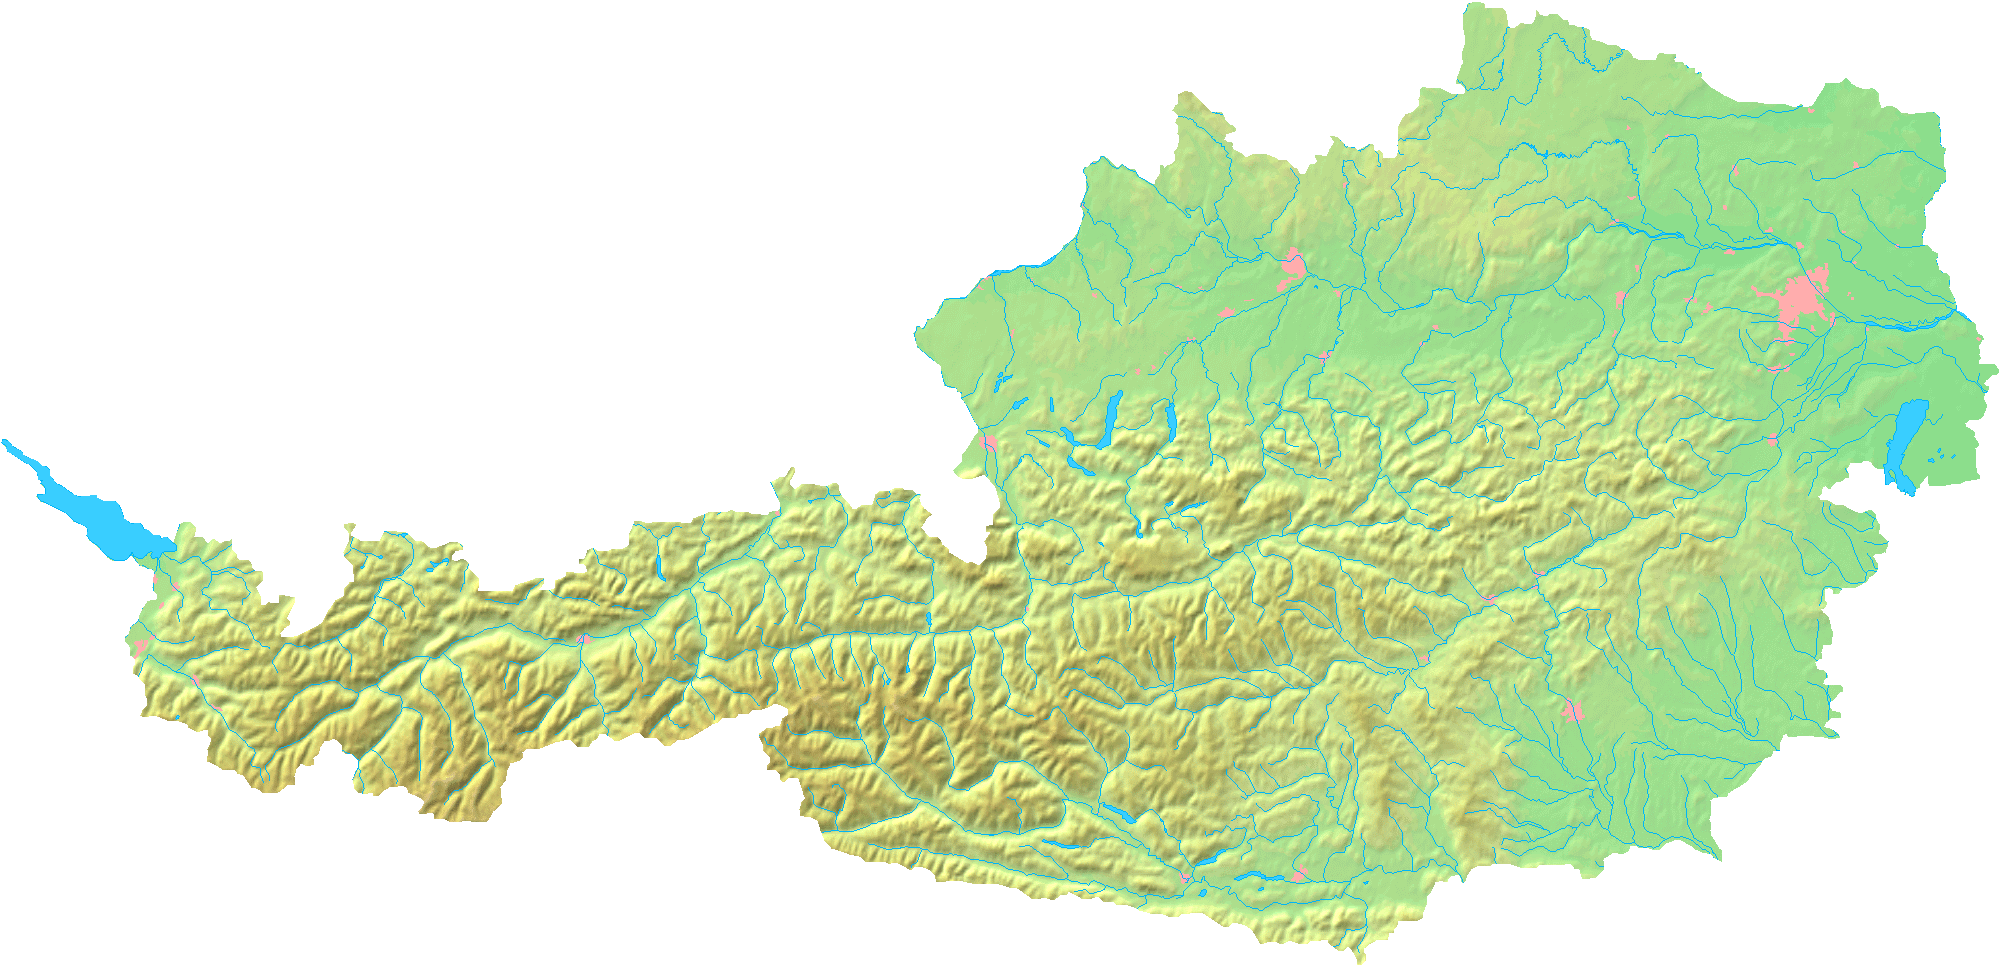 Topographic Map of Austria 2008